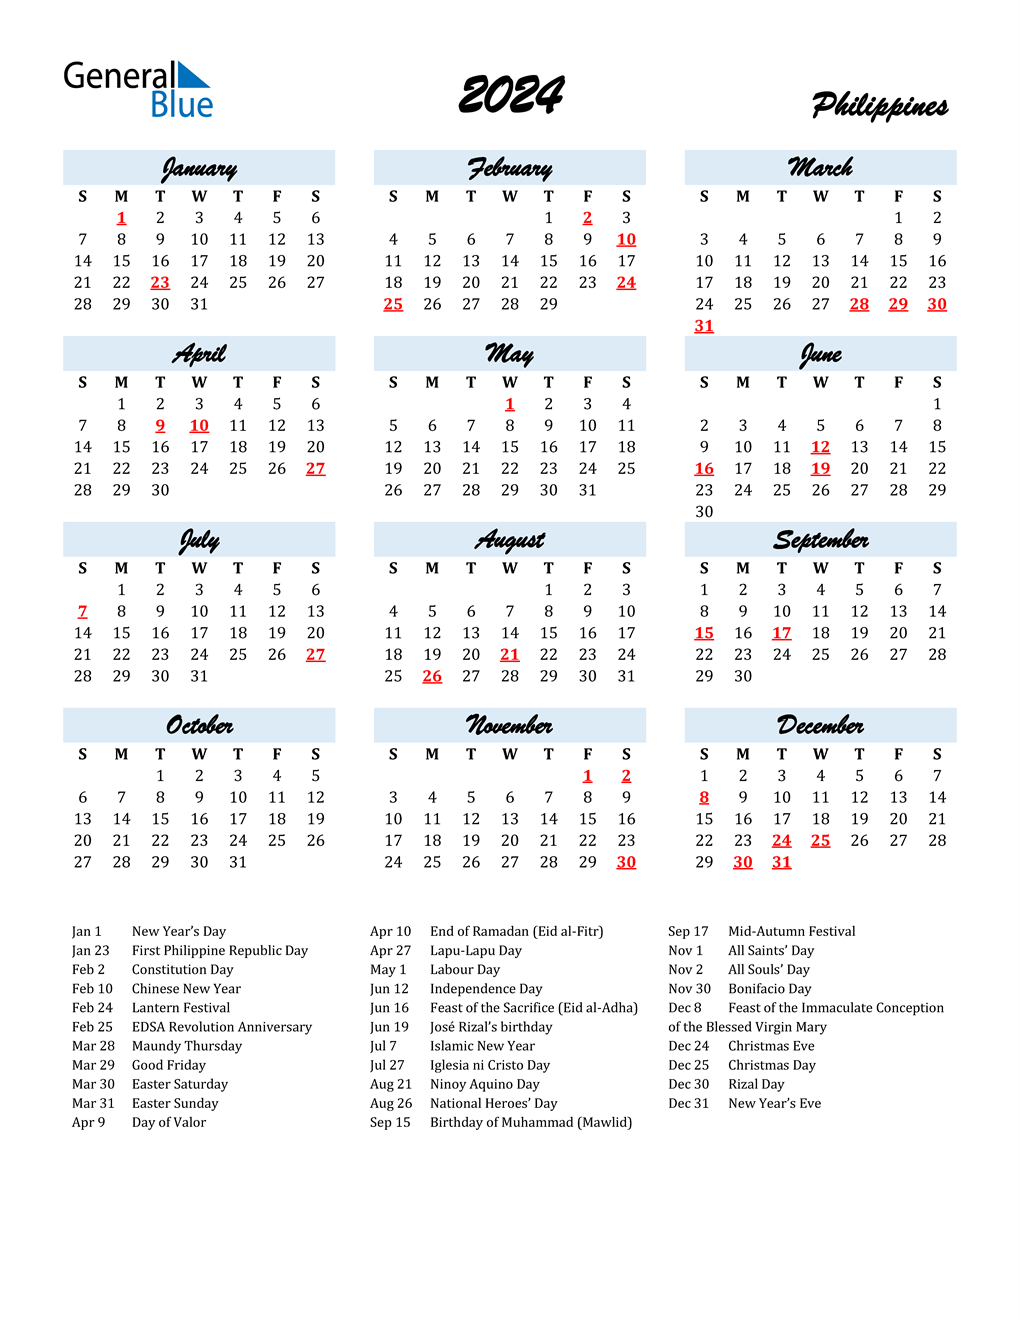 2024-philippines-calendar-with-holidays-gambaran